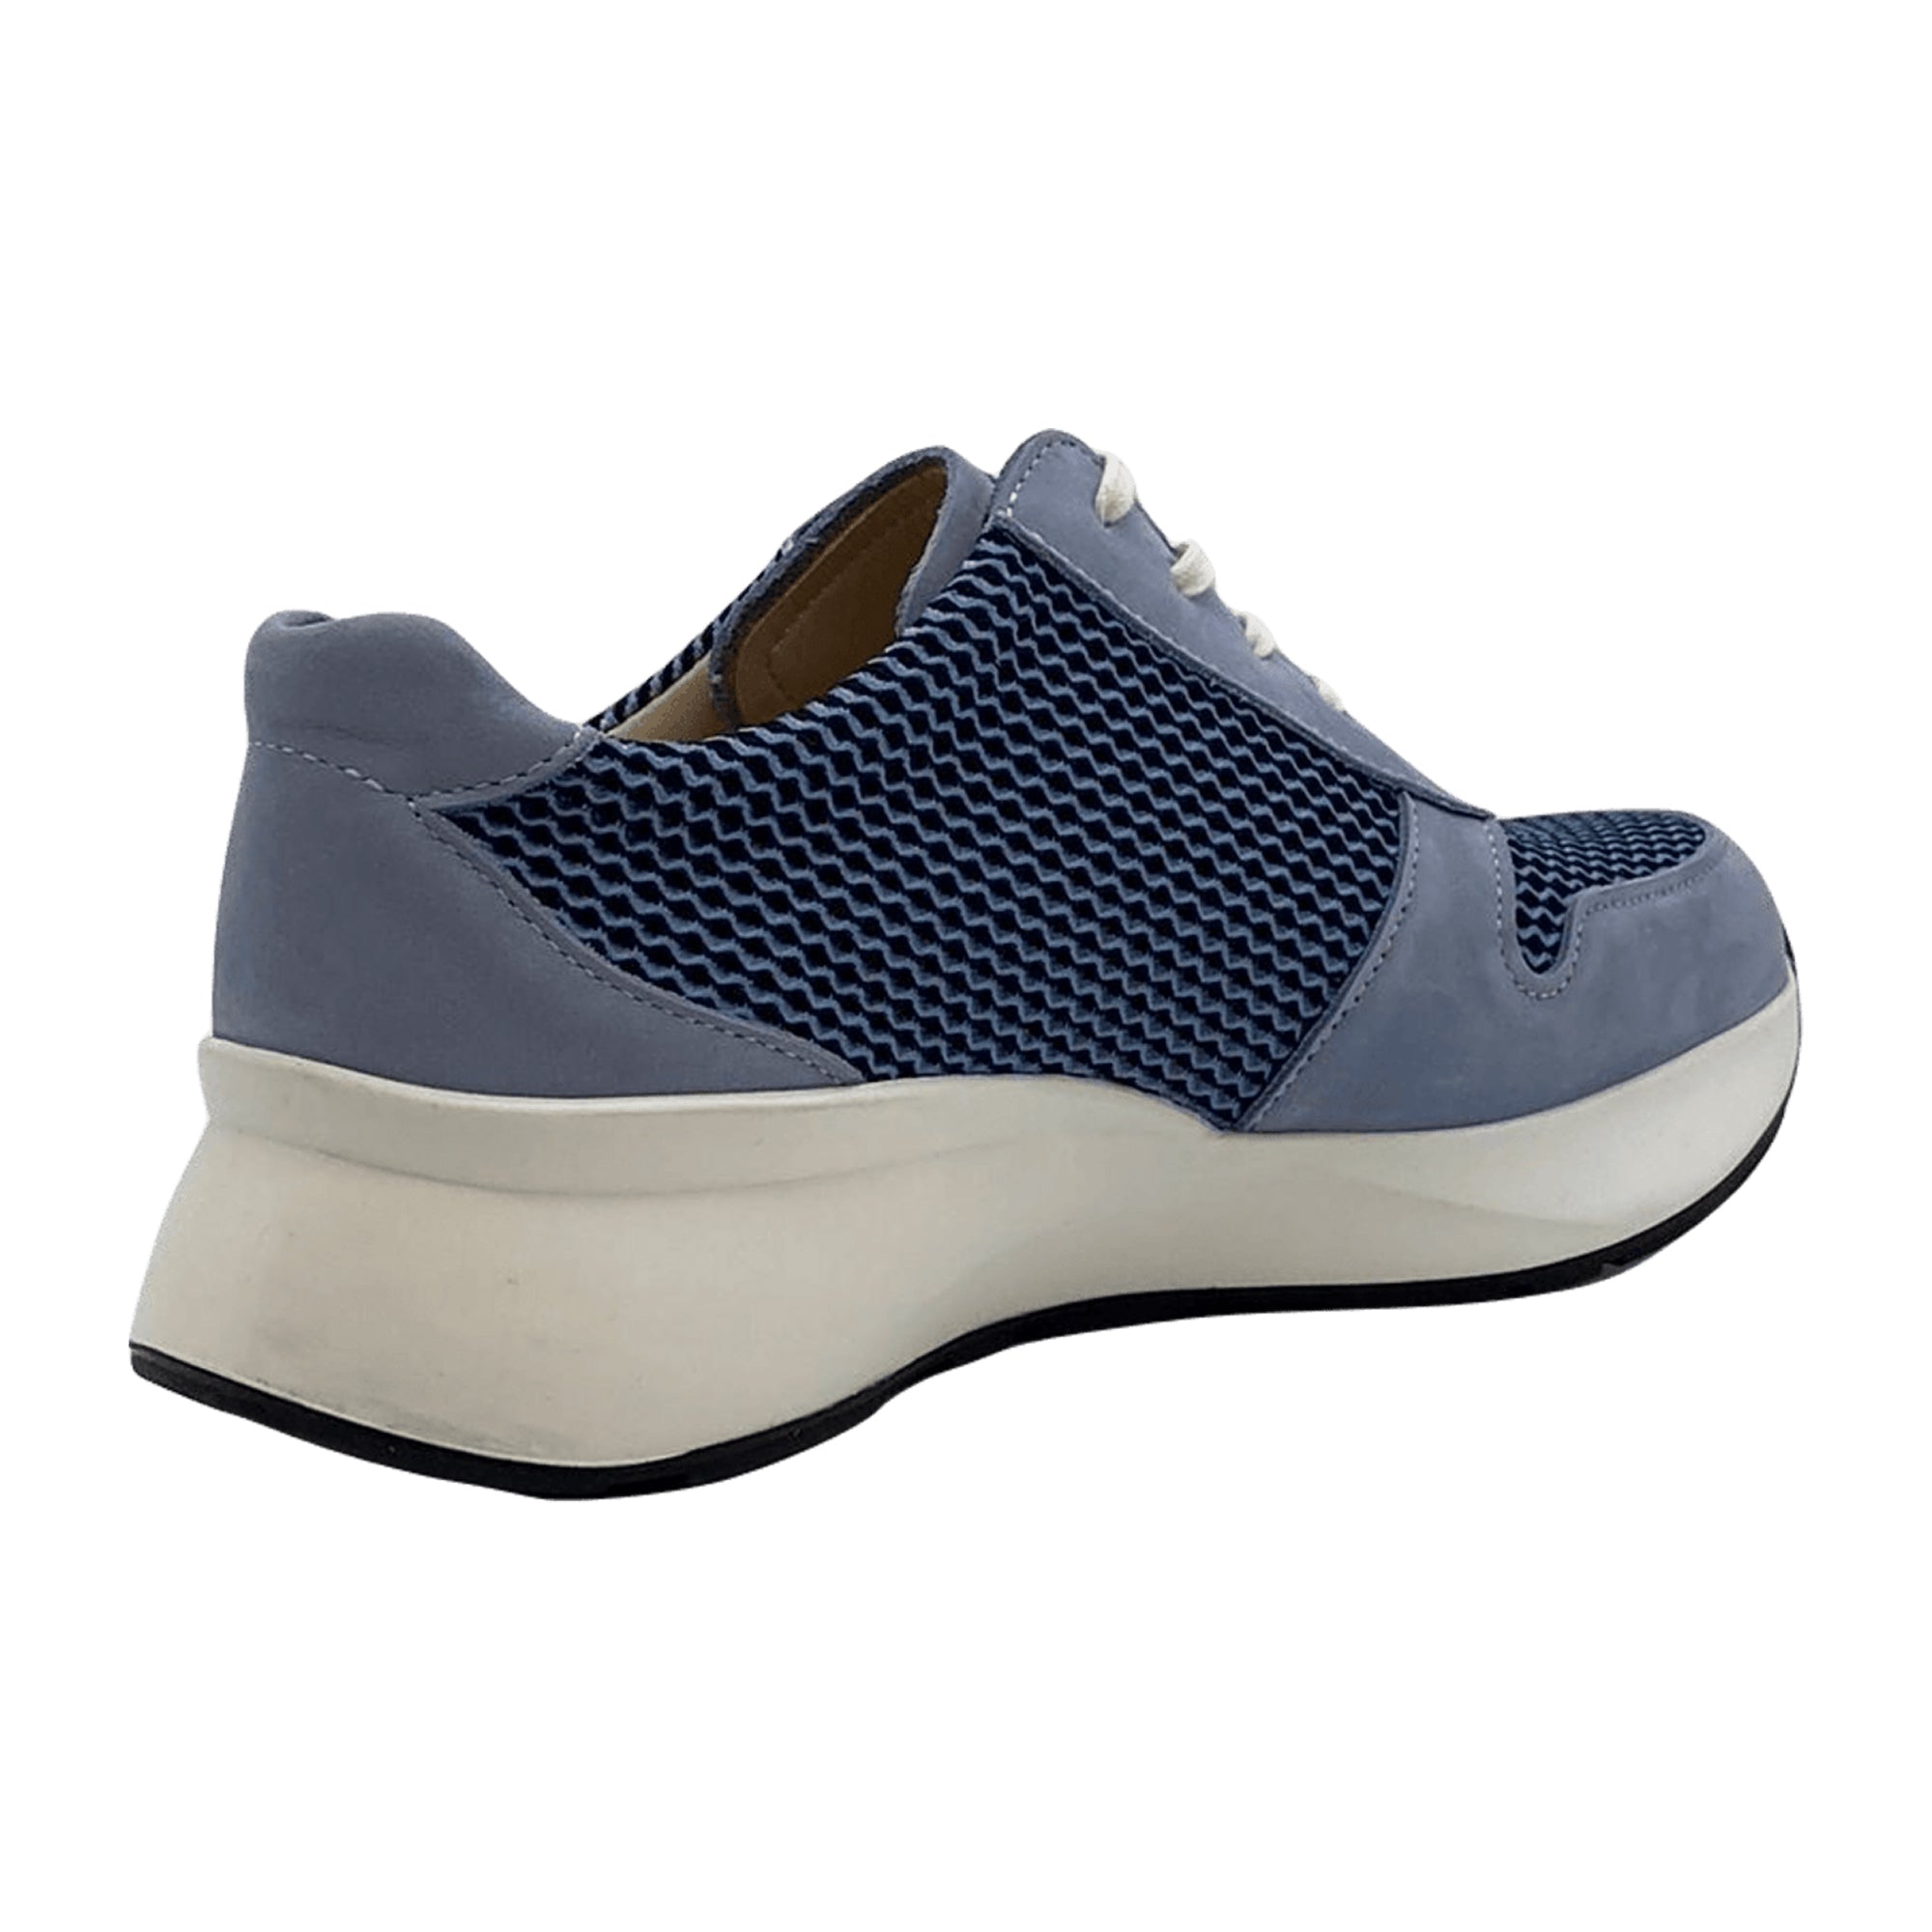 Finn Comfort Leganes Women's Comfort Shoes, Stylish Blue - Durable & Orthopedic Support